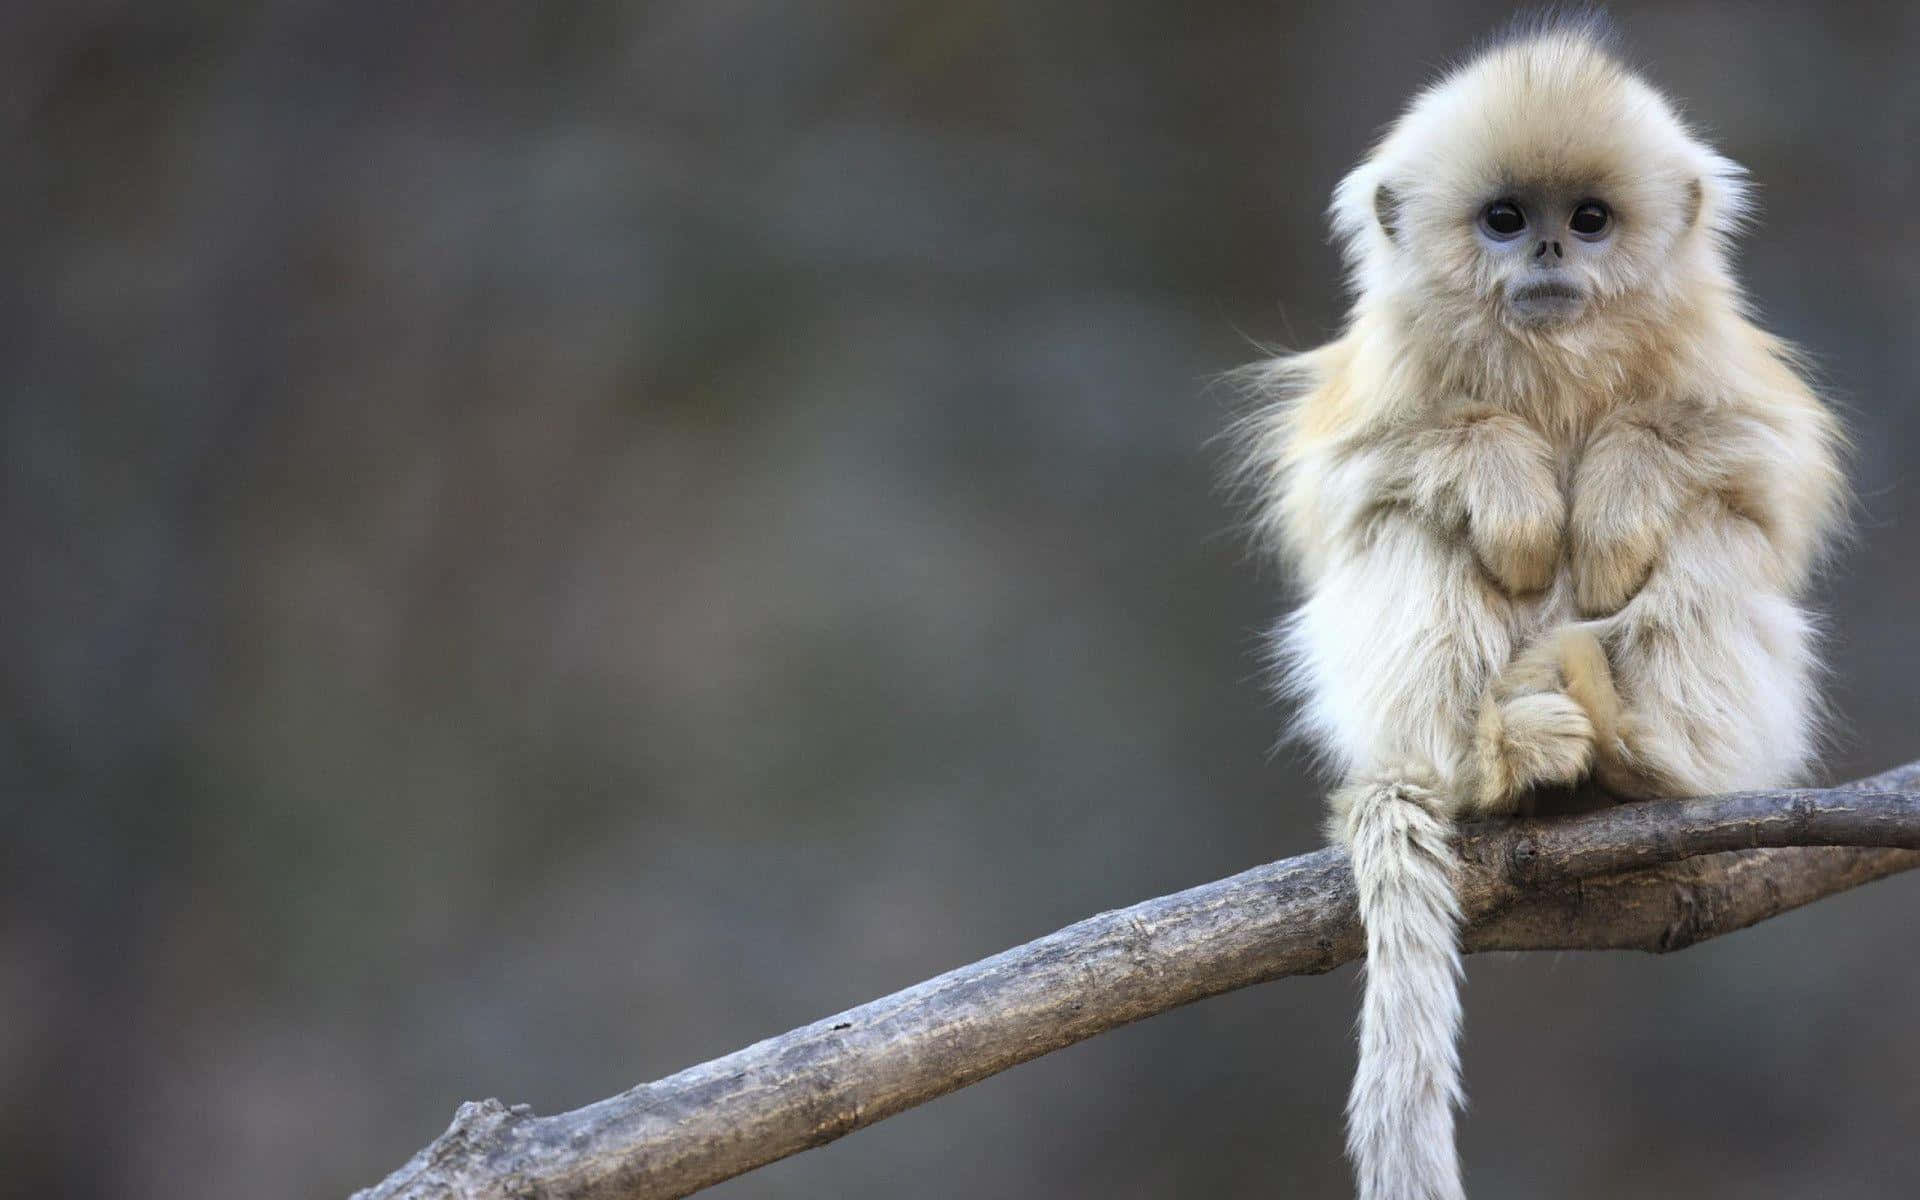 Expressive Monkey In Its Natural Habitat